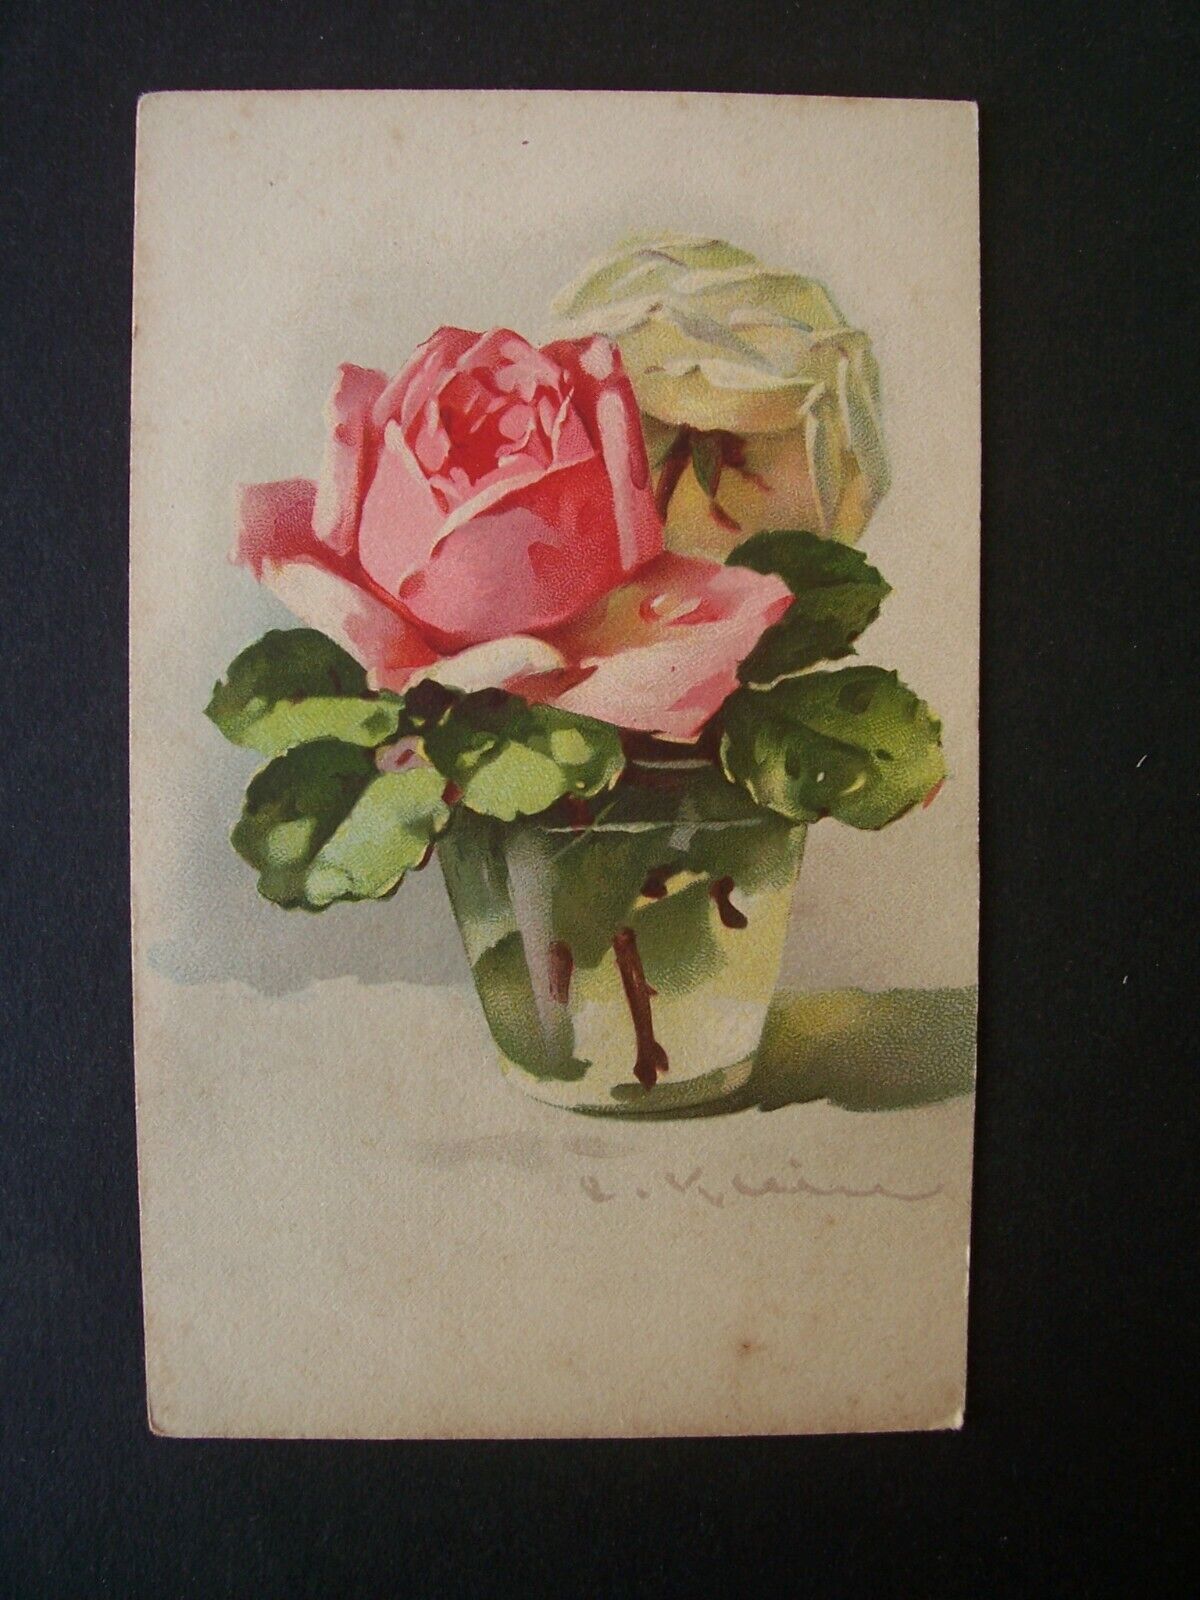 CPA - Illustrator: Catharina Klein - Flowers: Roses in Vases... - 1931